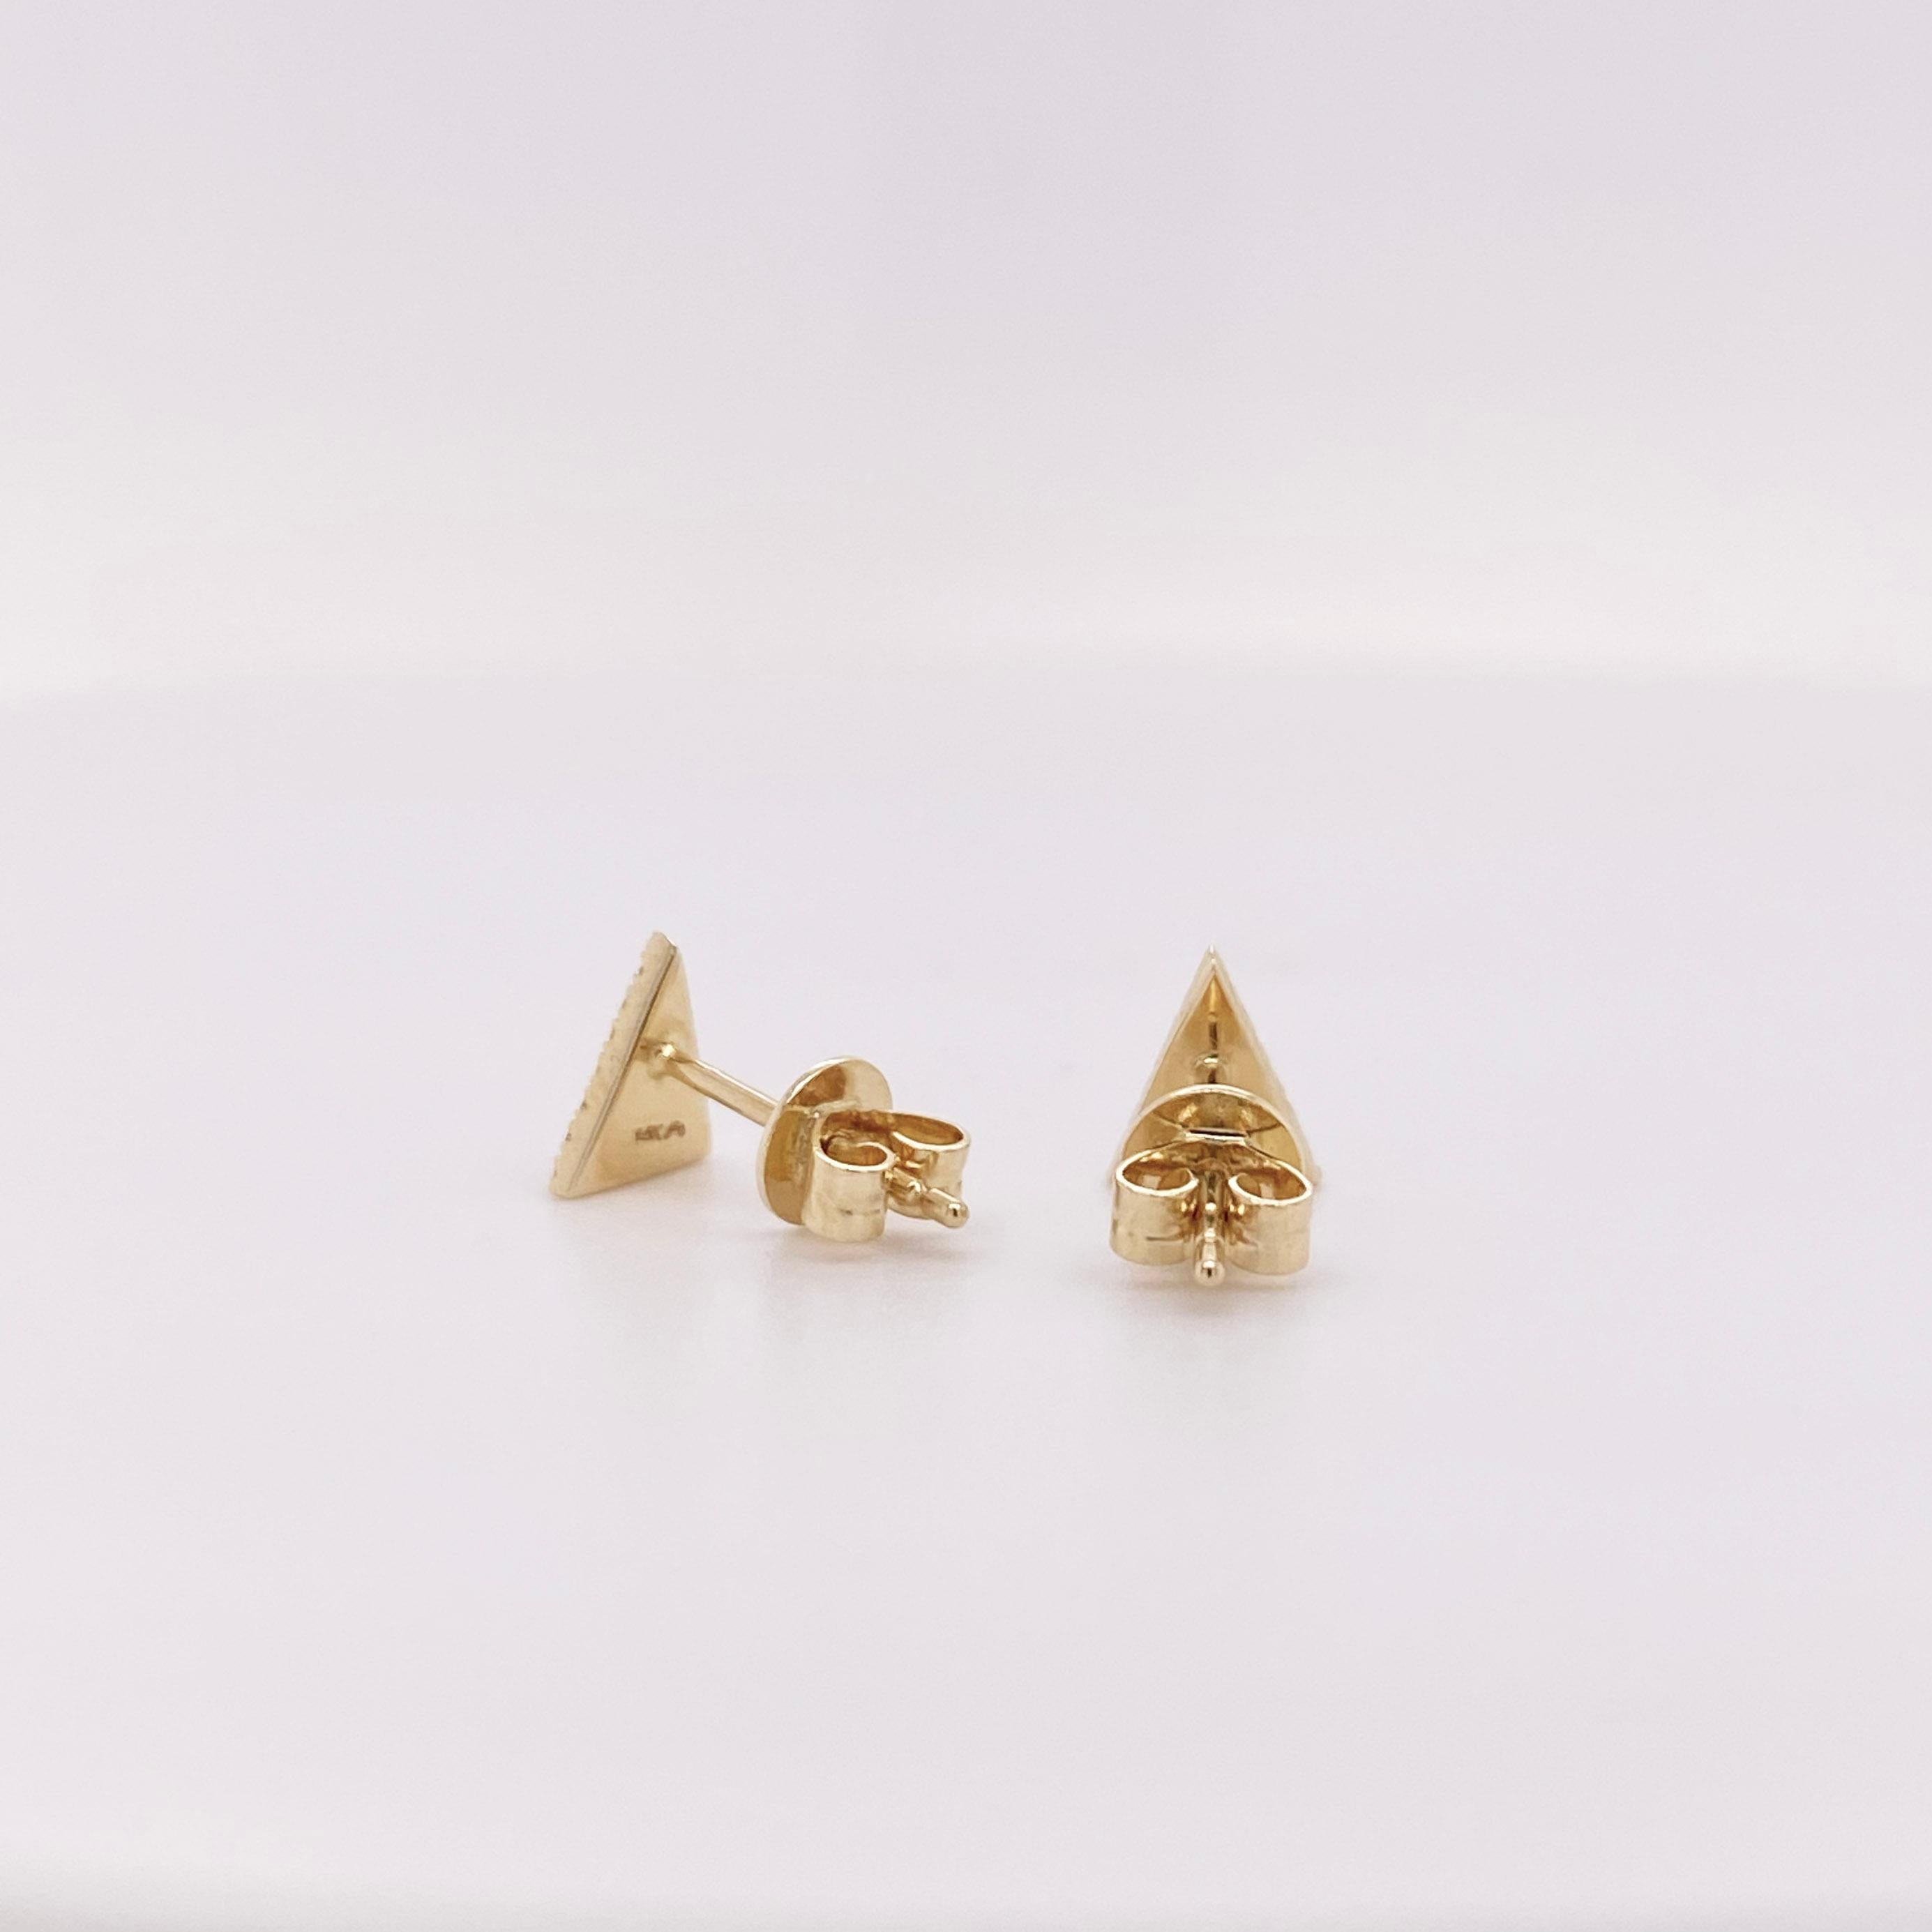 Modern Pave Diamond Triangle Stud Earrings in 14K Yellow Gold 1/10 Carat Diamond Studs